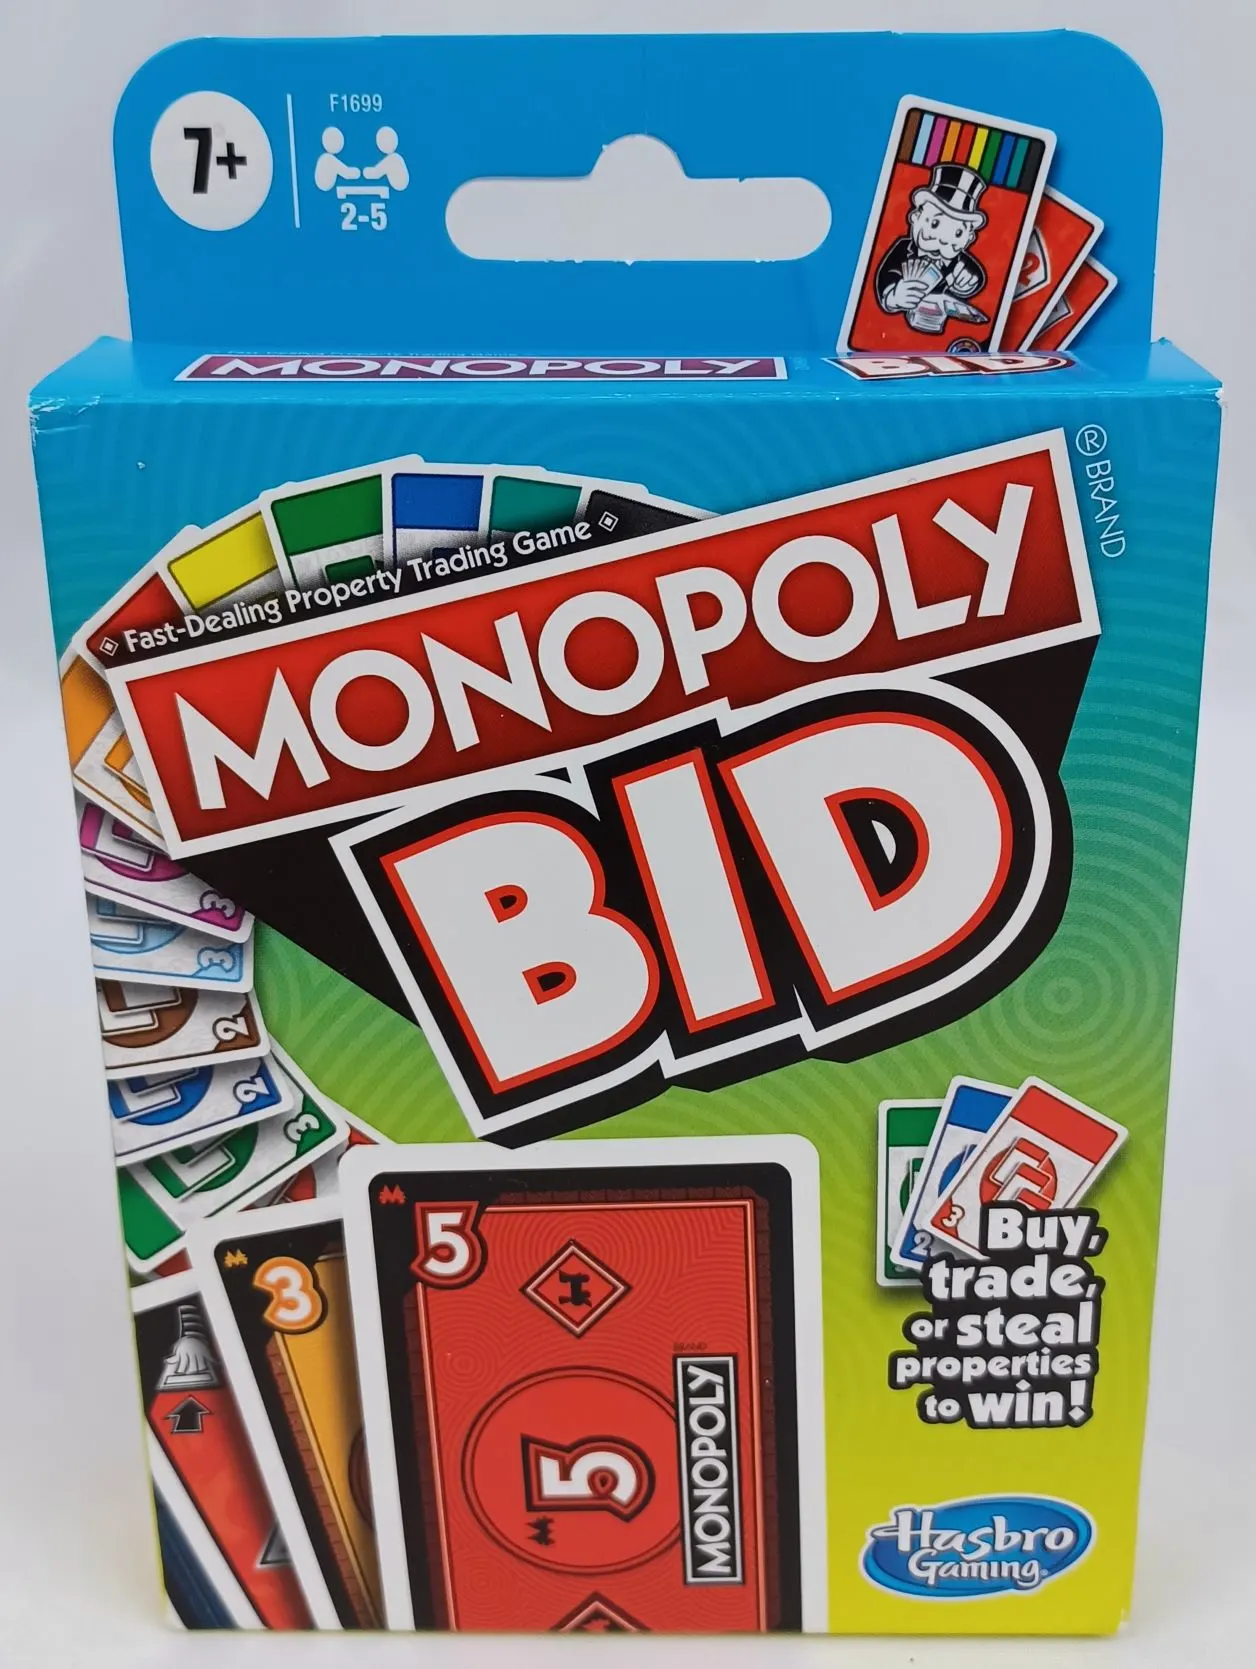 Box for Monopoly Bid